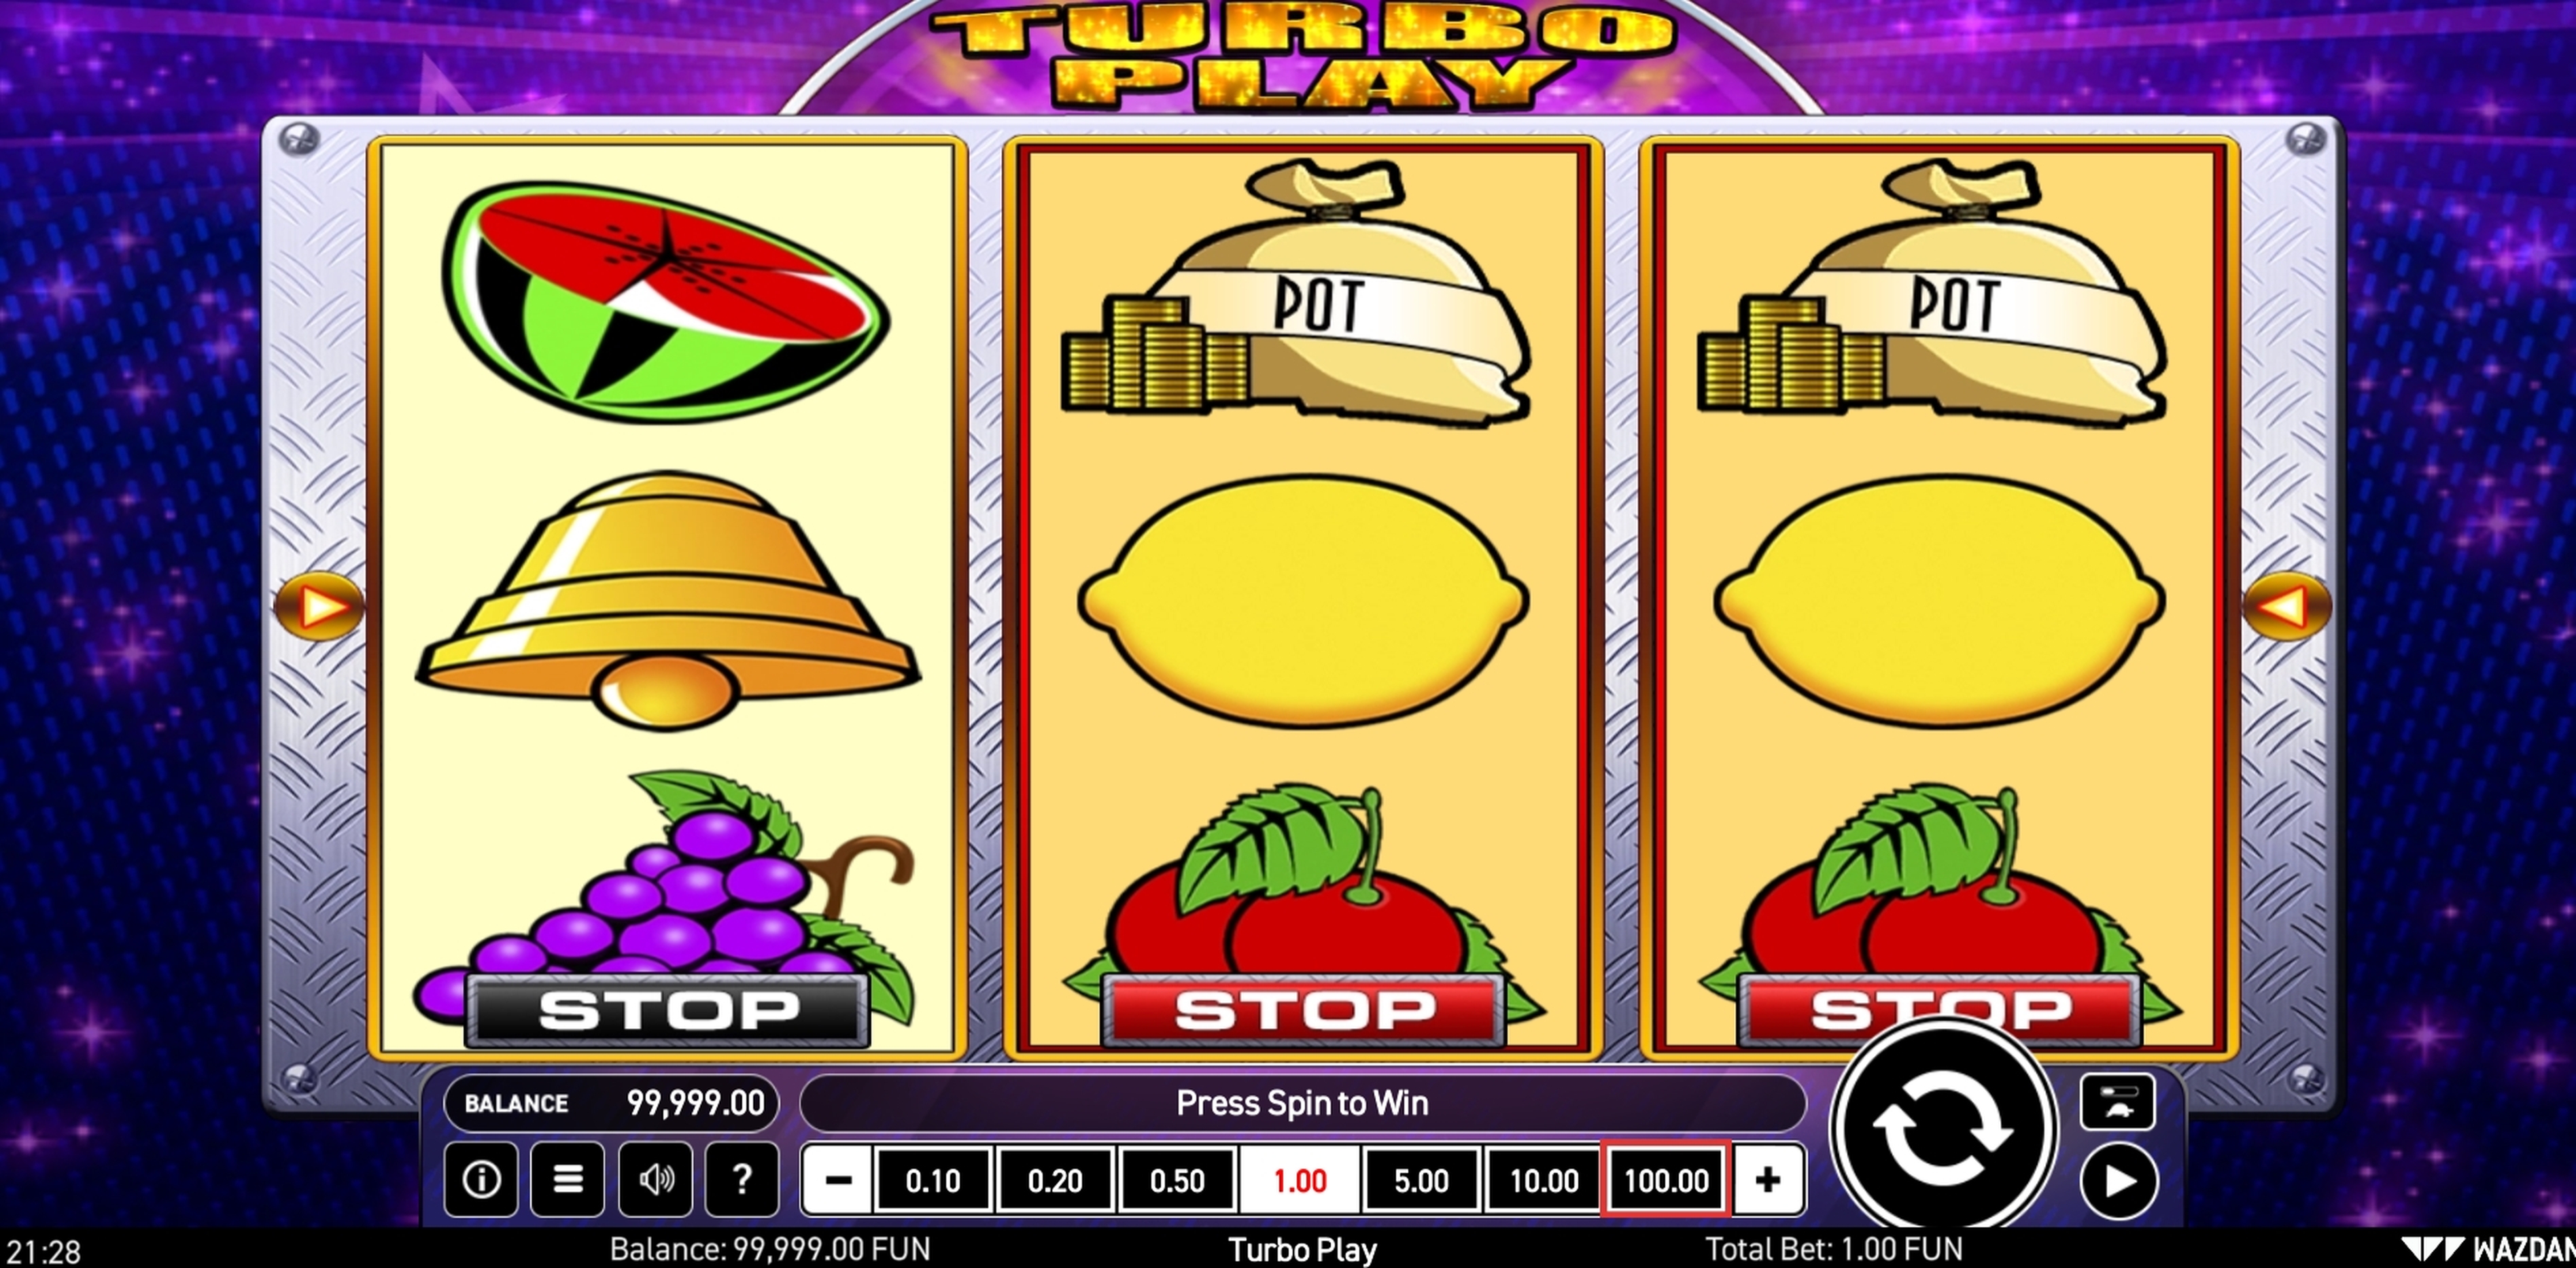 Win Money in Turbo Play Free Slot Game by Wazdan